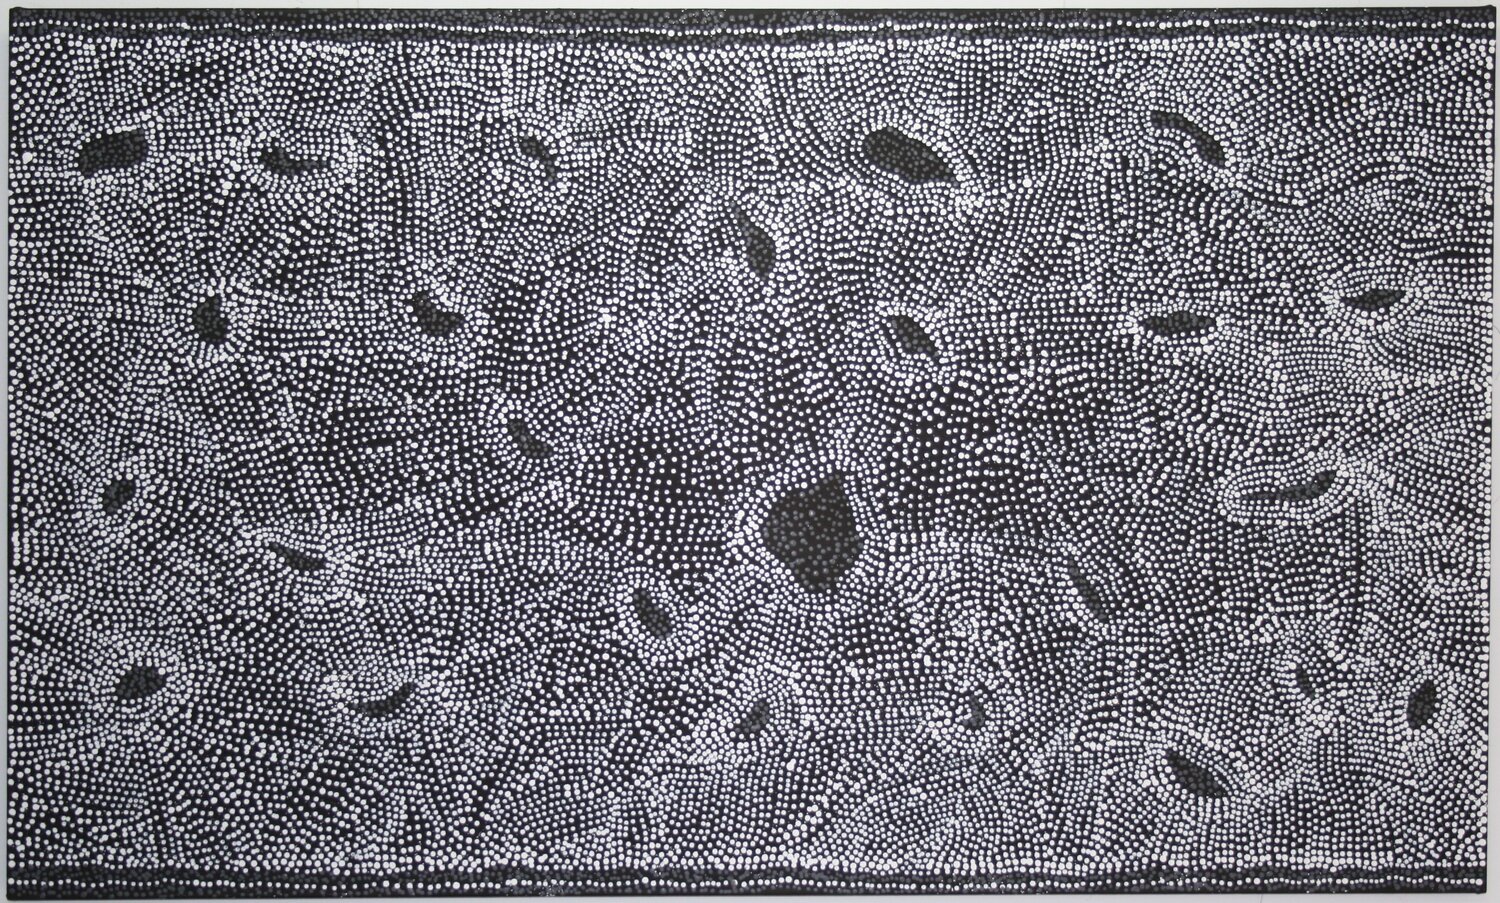 Pirlinyanu Dreaming, 2008 by Julie Nangala Robertson, 152x91cm, Cat 13377